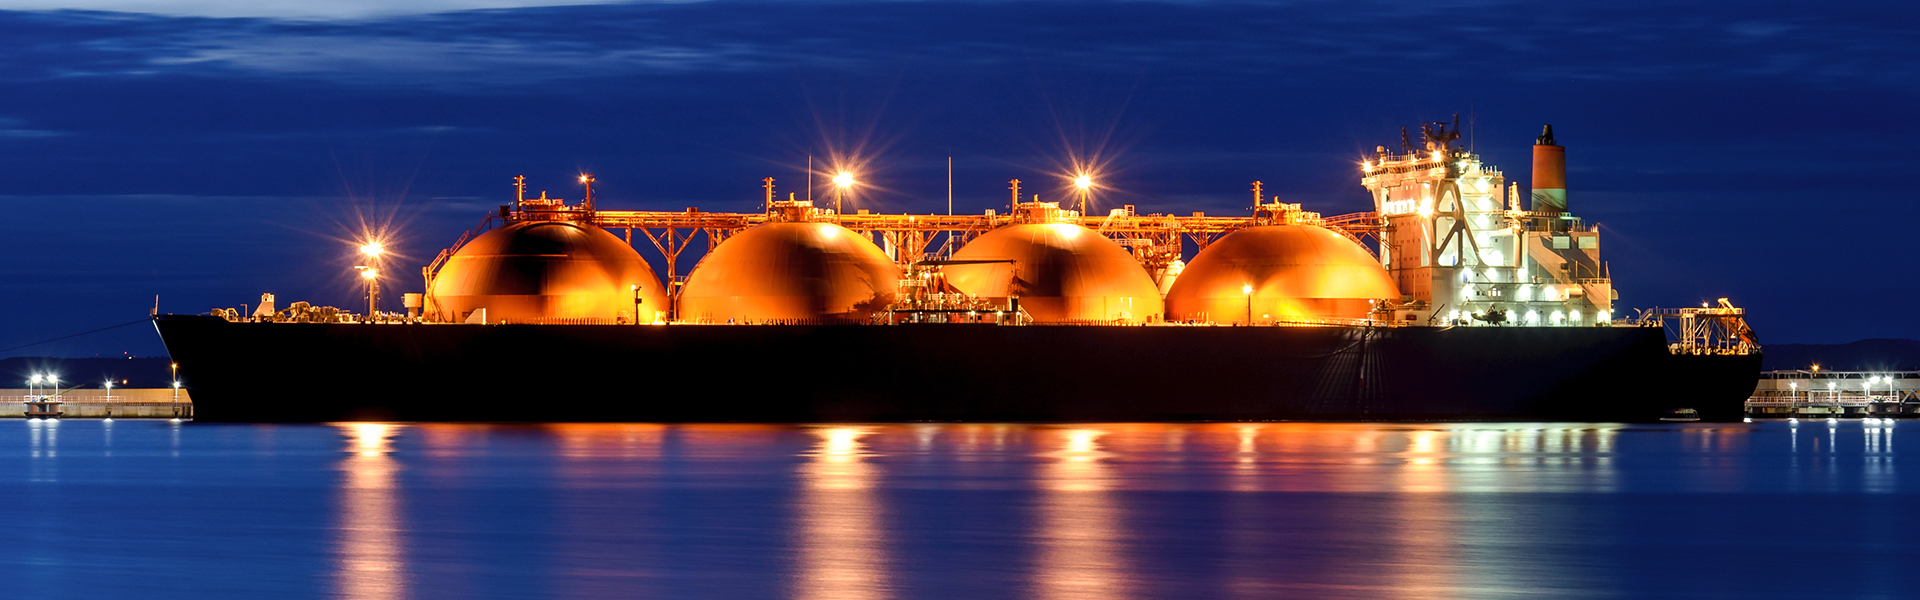 Image of LNG Tanker